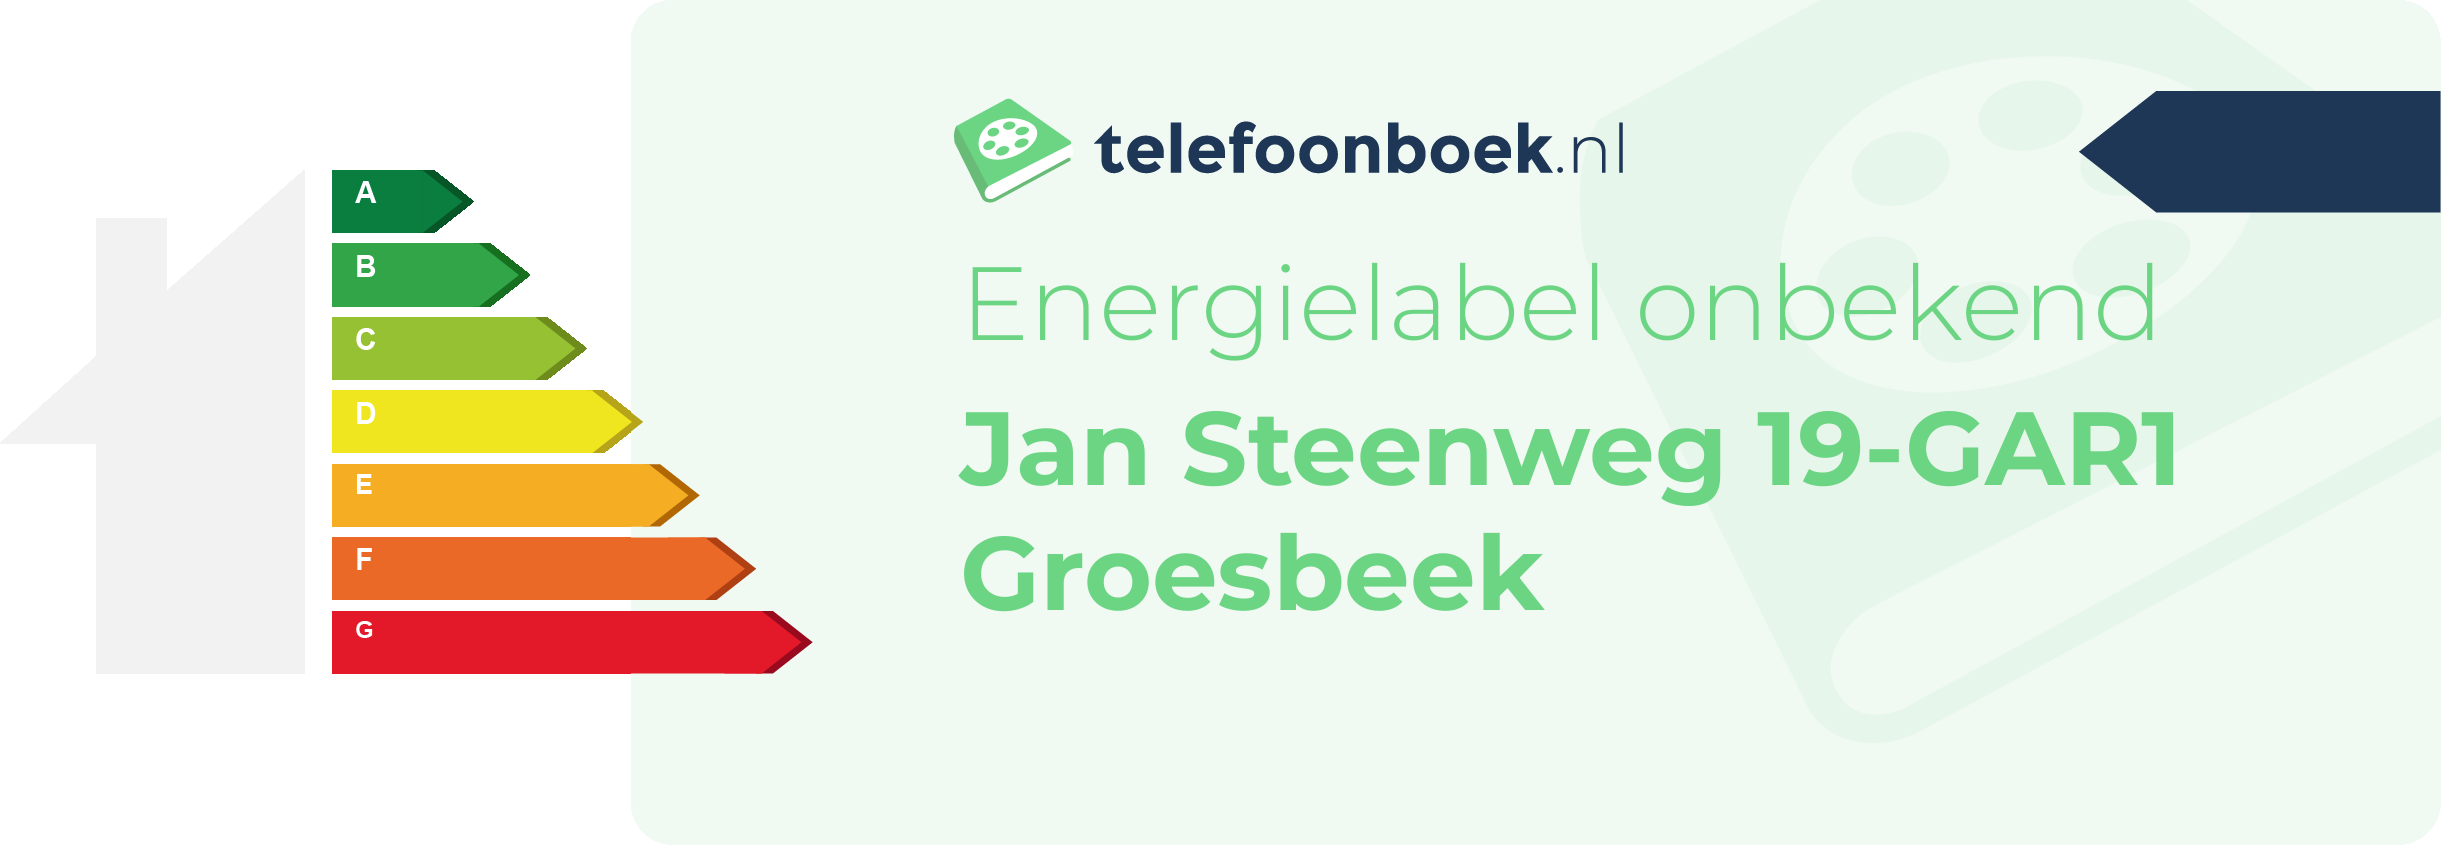 Energielabel Jan Steenweg 19-GAR1 Groesbeek